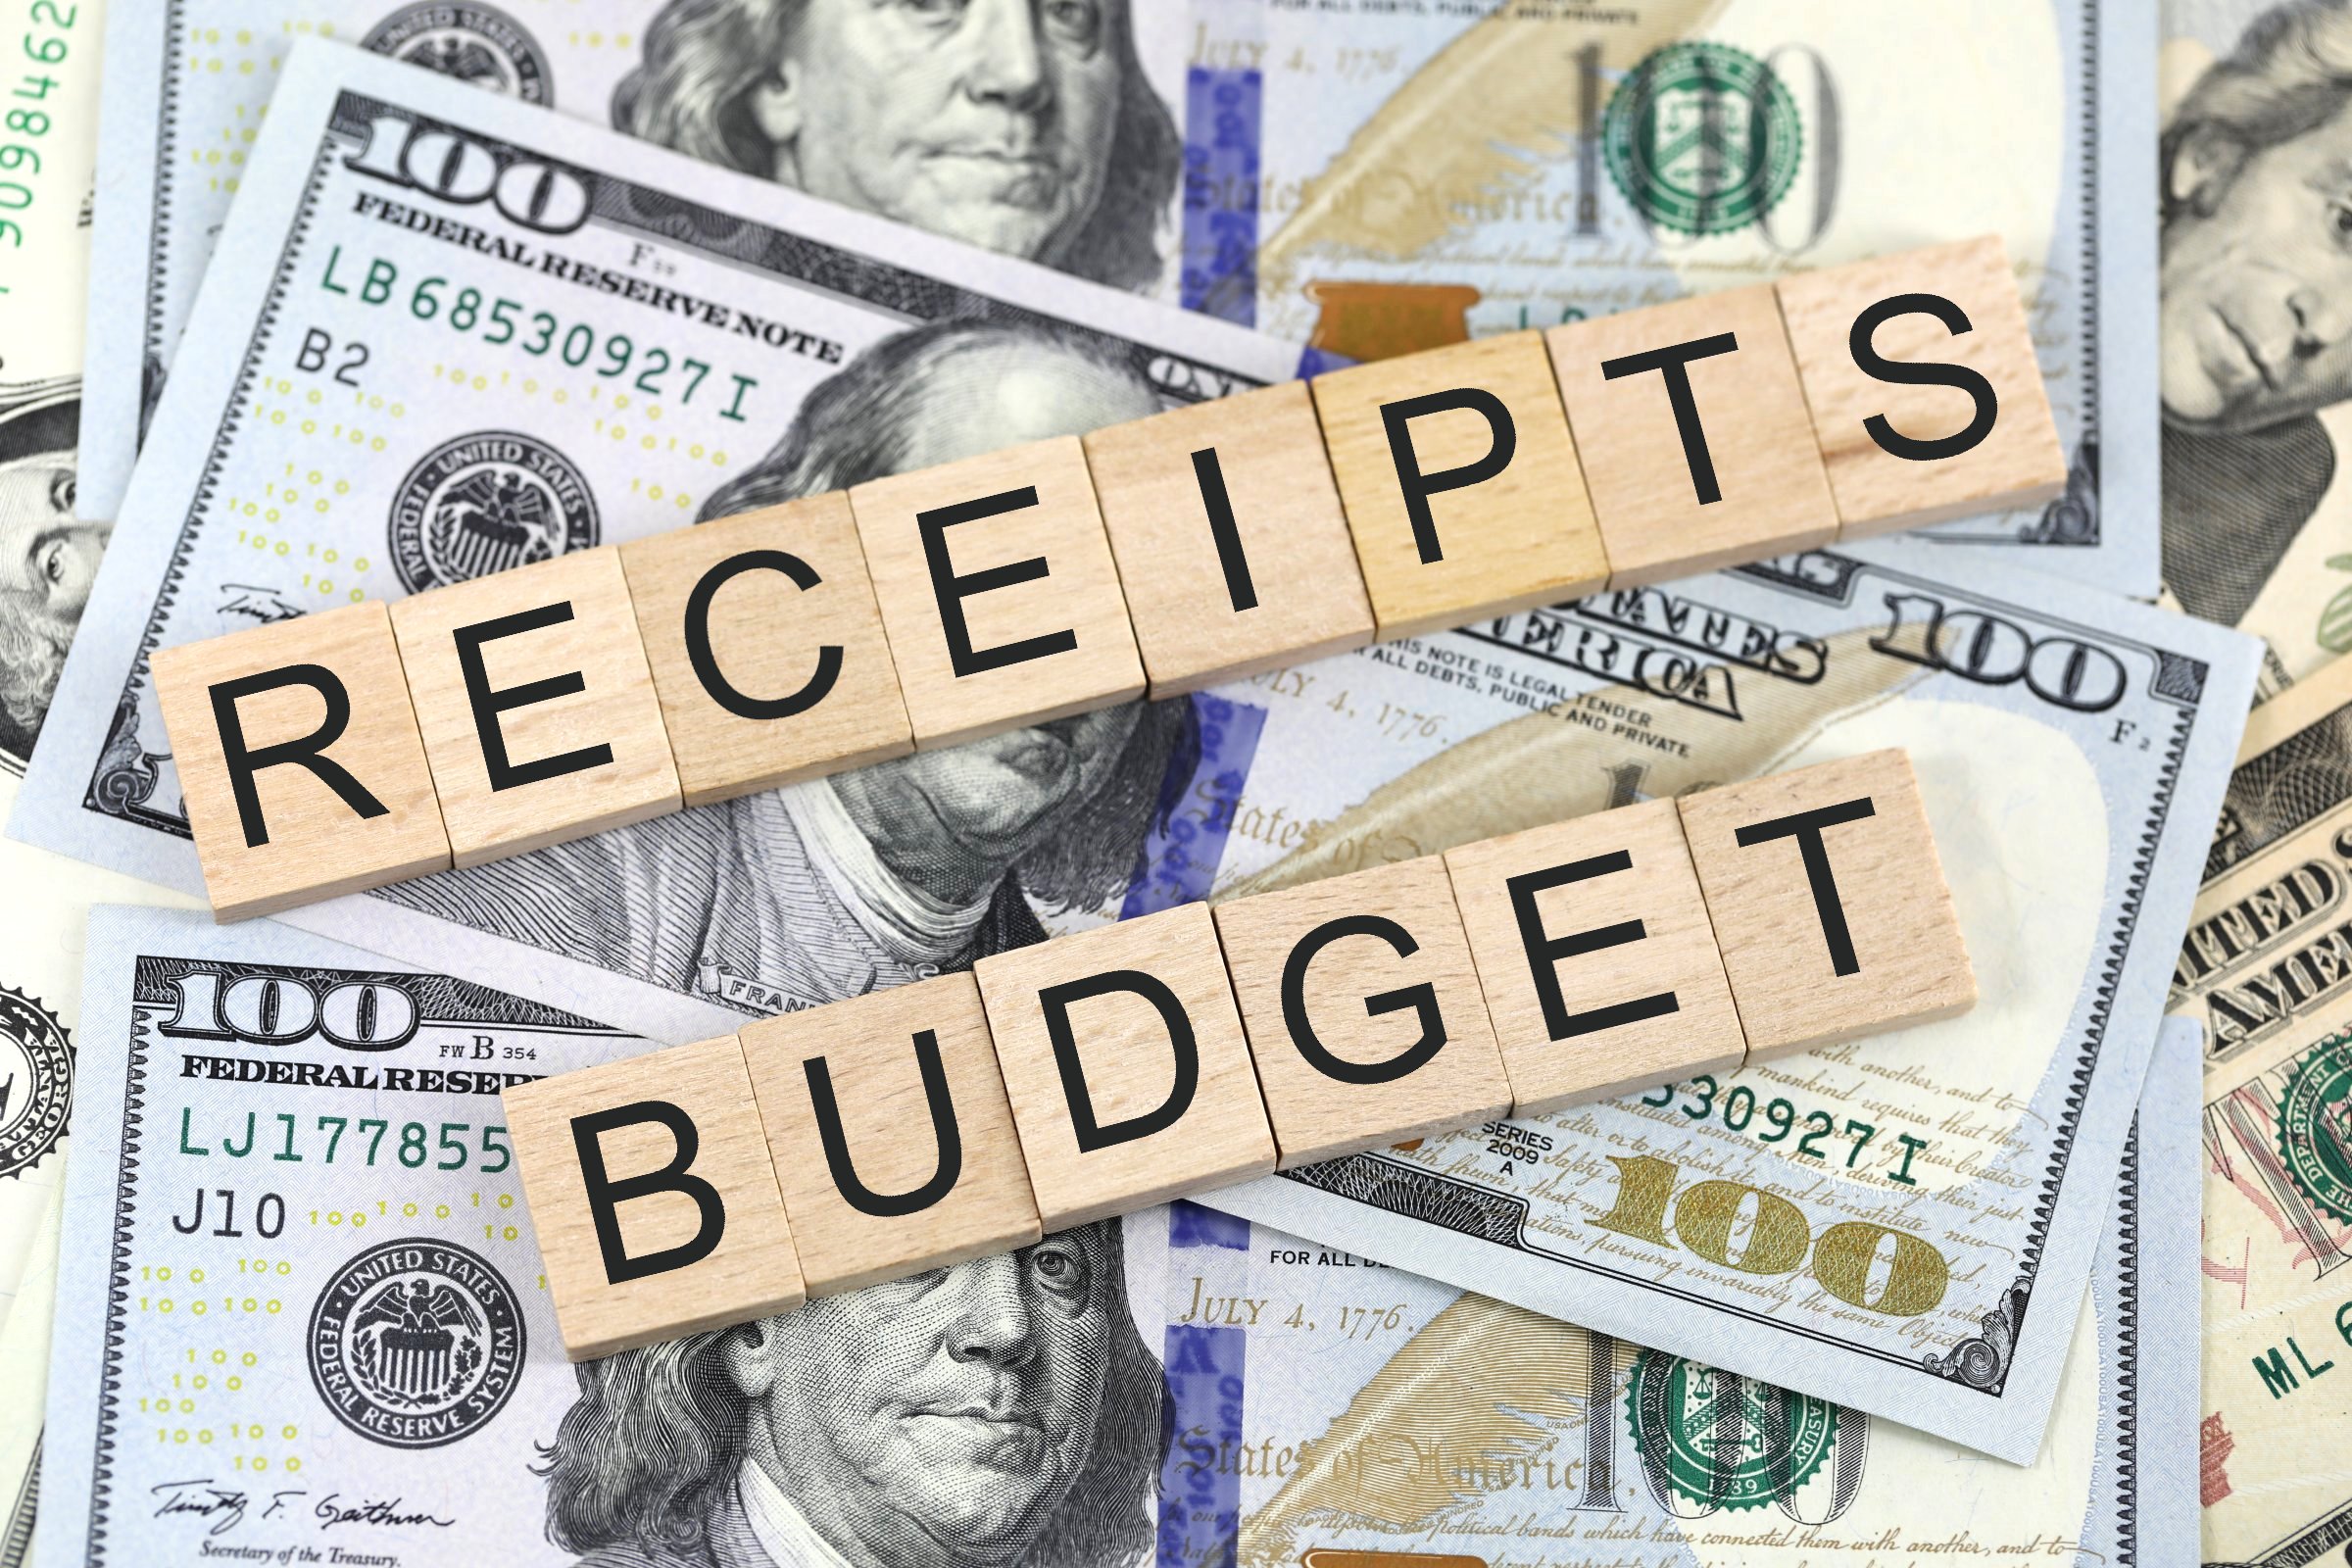 receipts budget